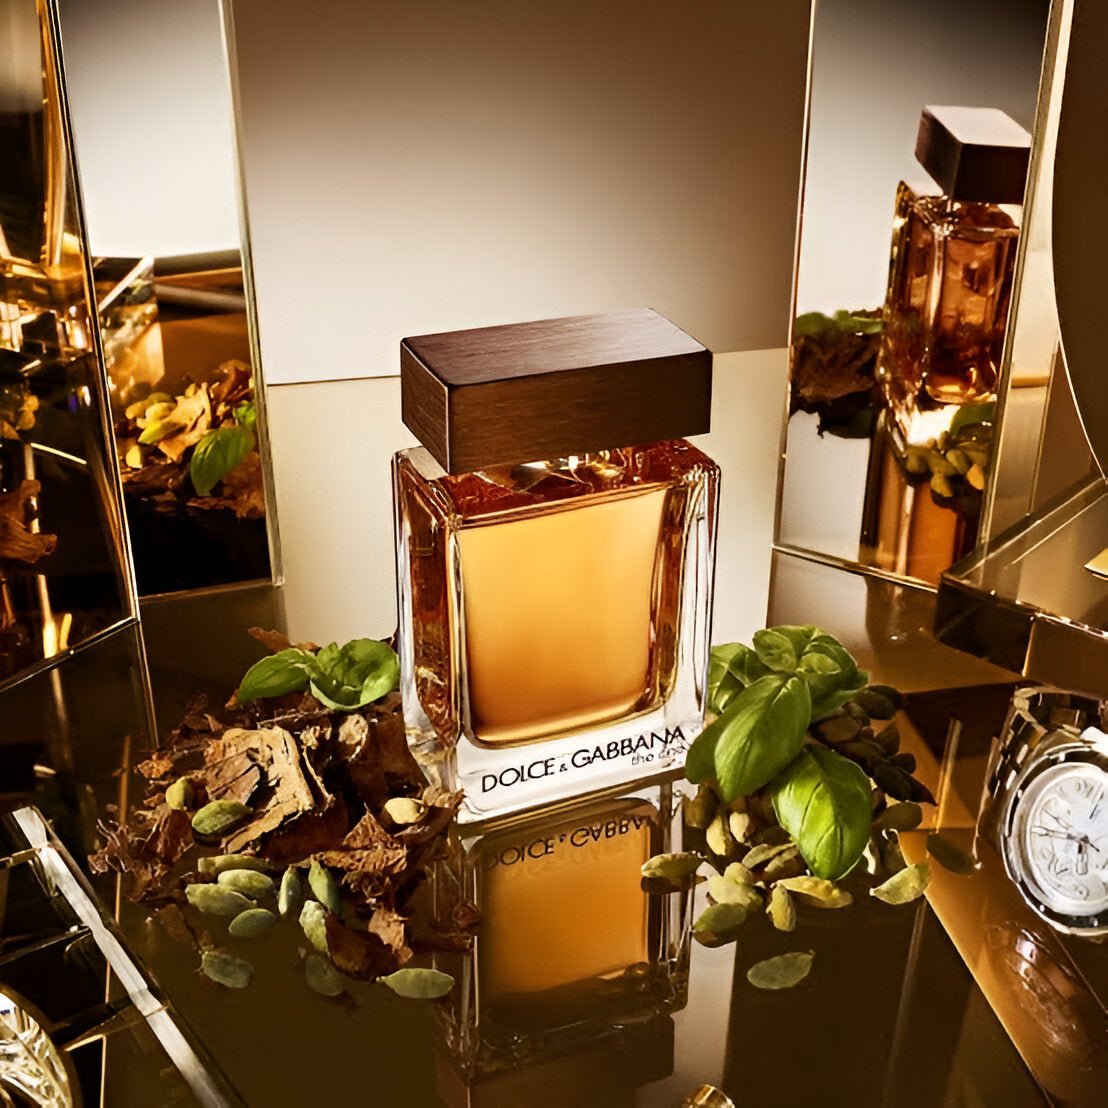 Dolce & Gabbana The One EDT For Women | My Perfume Shop Australia